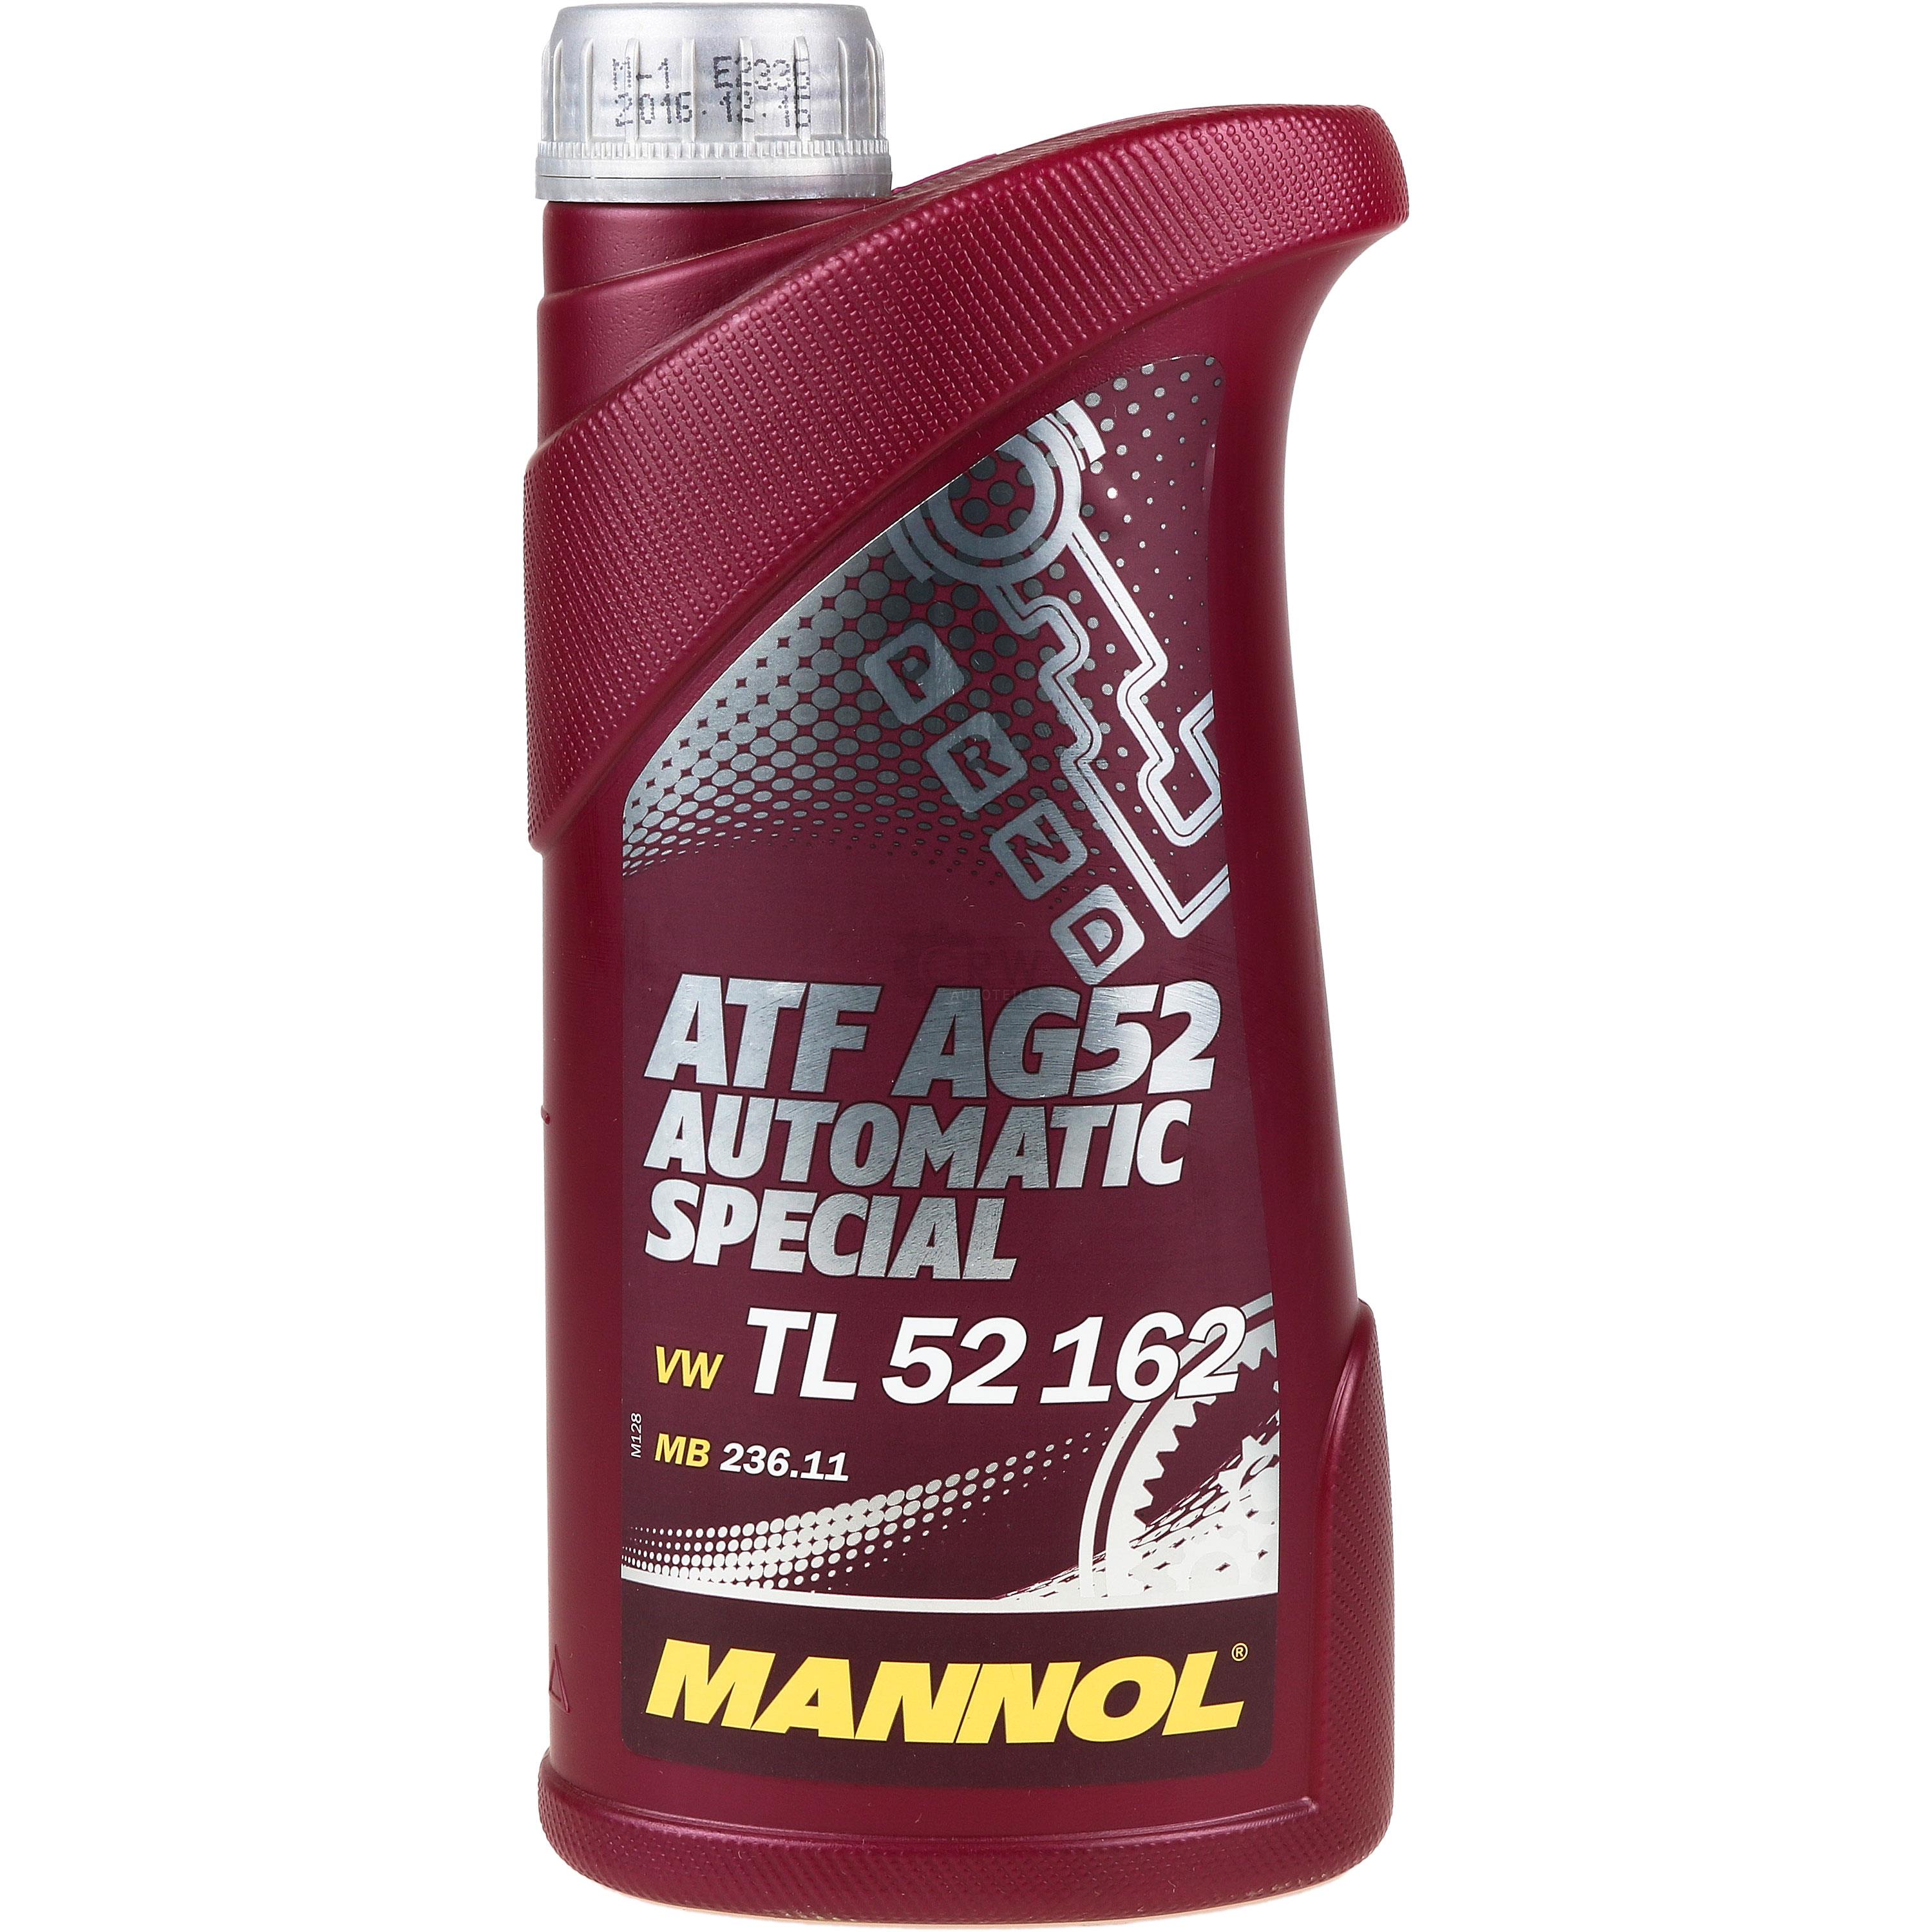 1 Liter  MANNOL Automatikgetriebeöl ATF AG52 Automatic Special